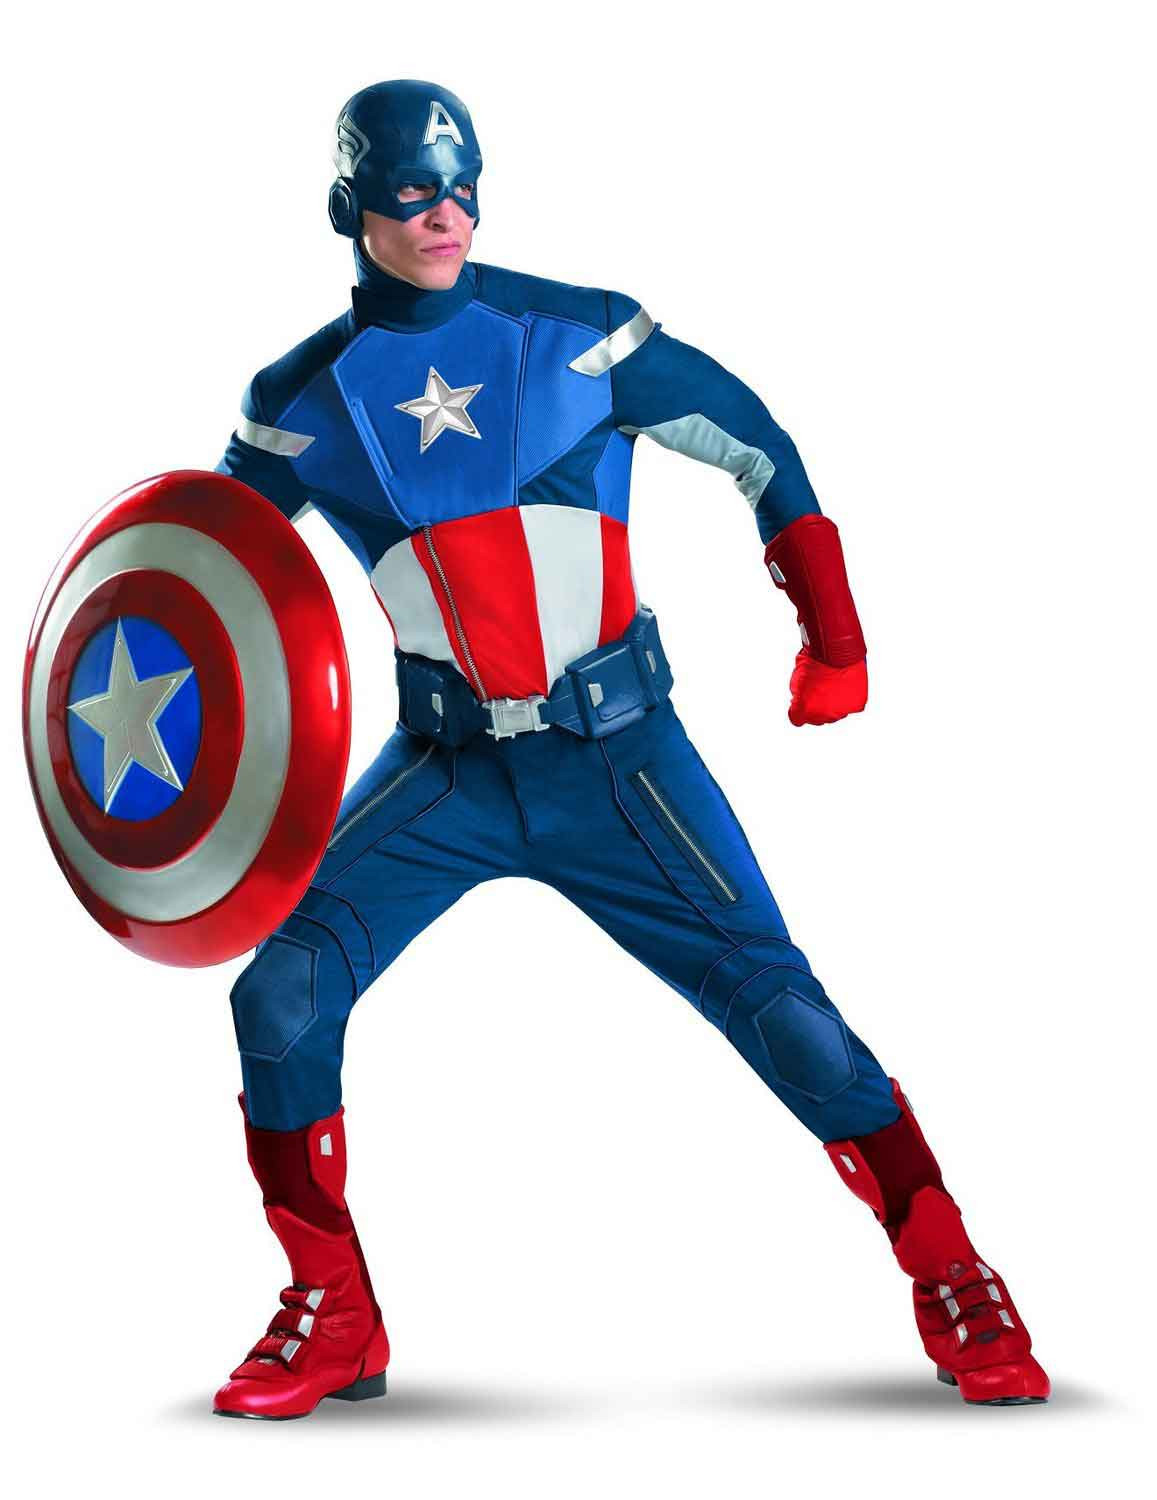 Captain America Mask DIY
 How to Make a Captain America Costume DIY Guide